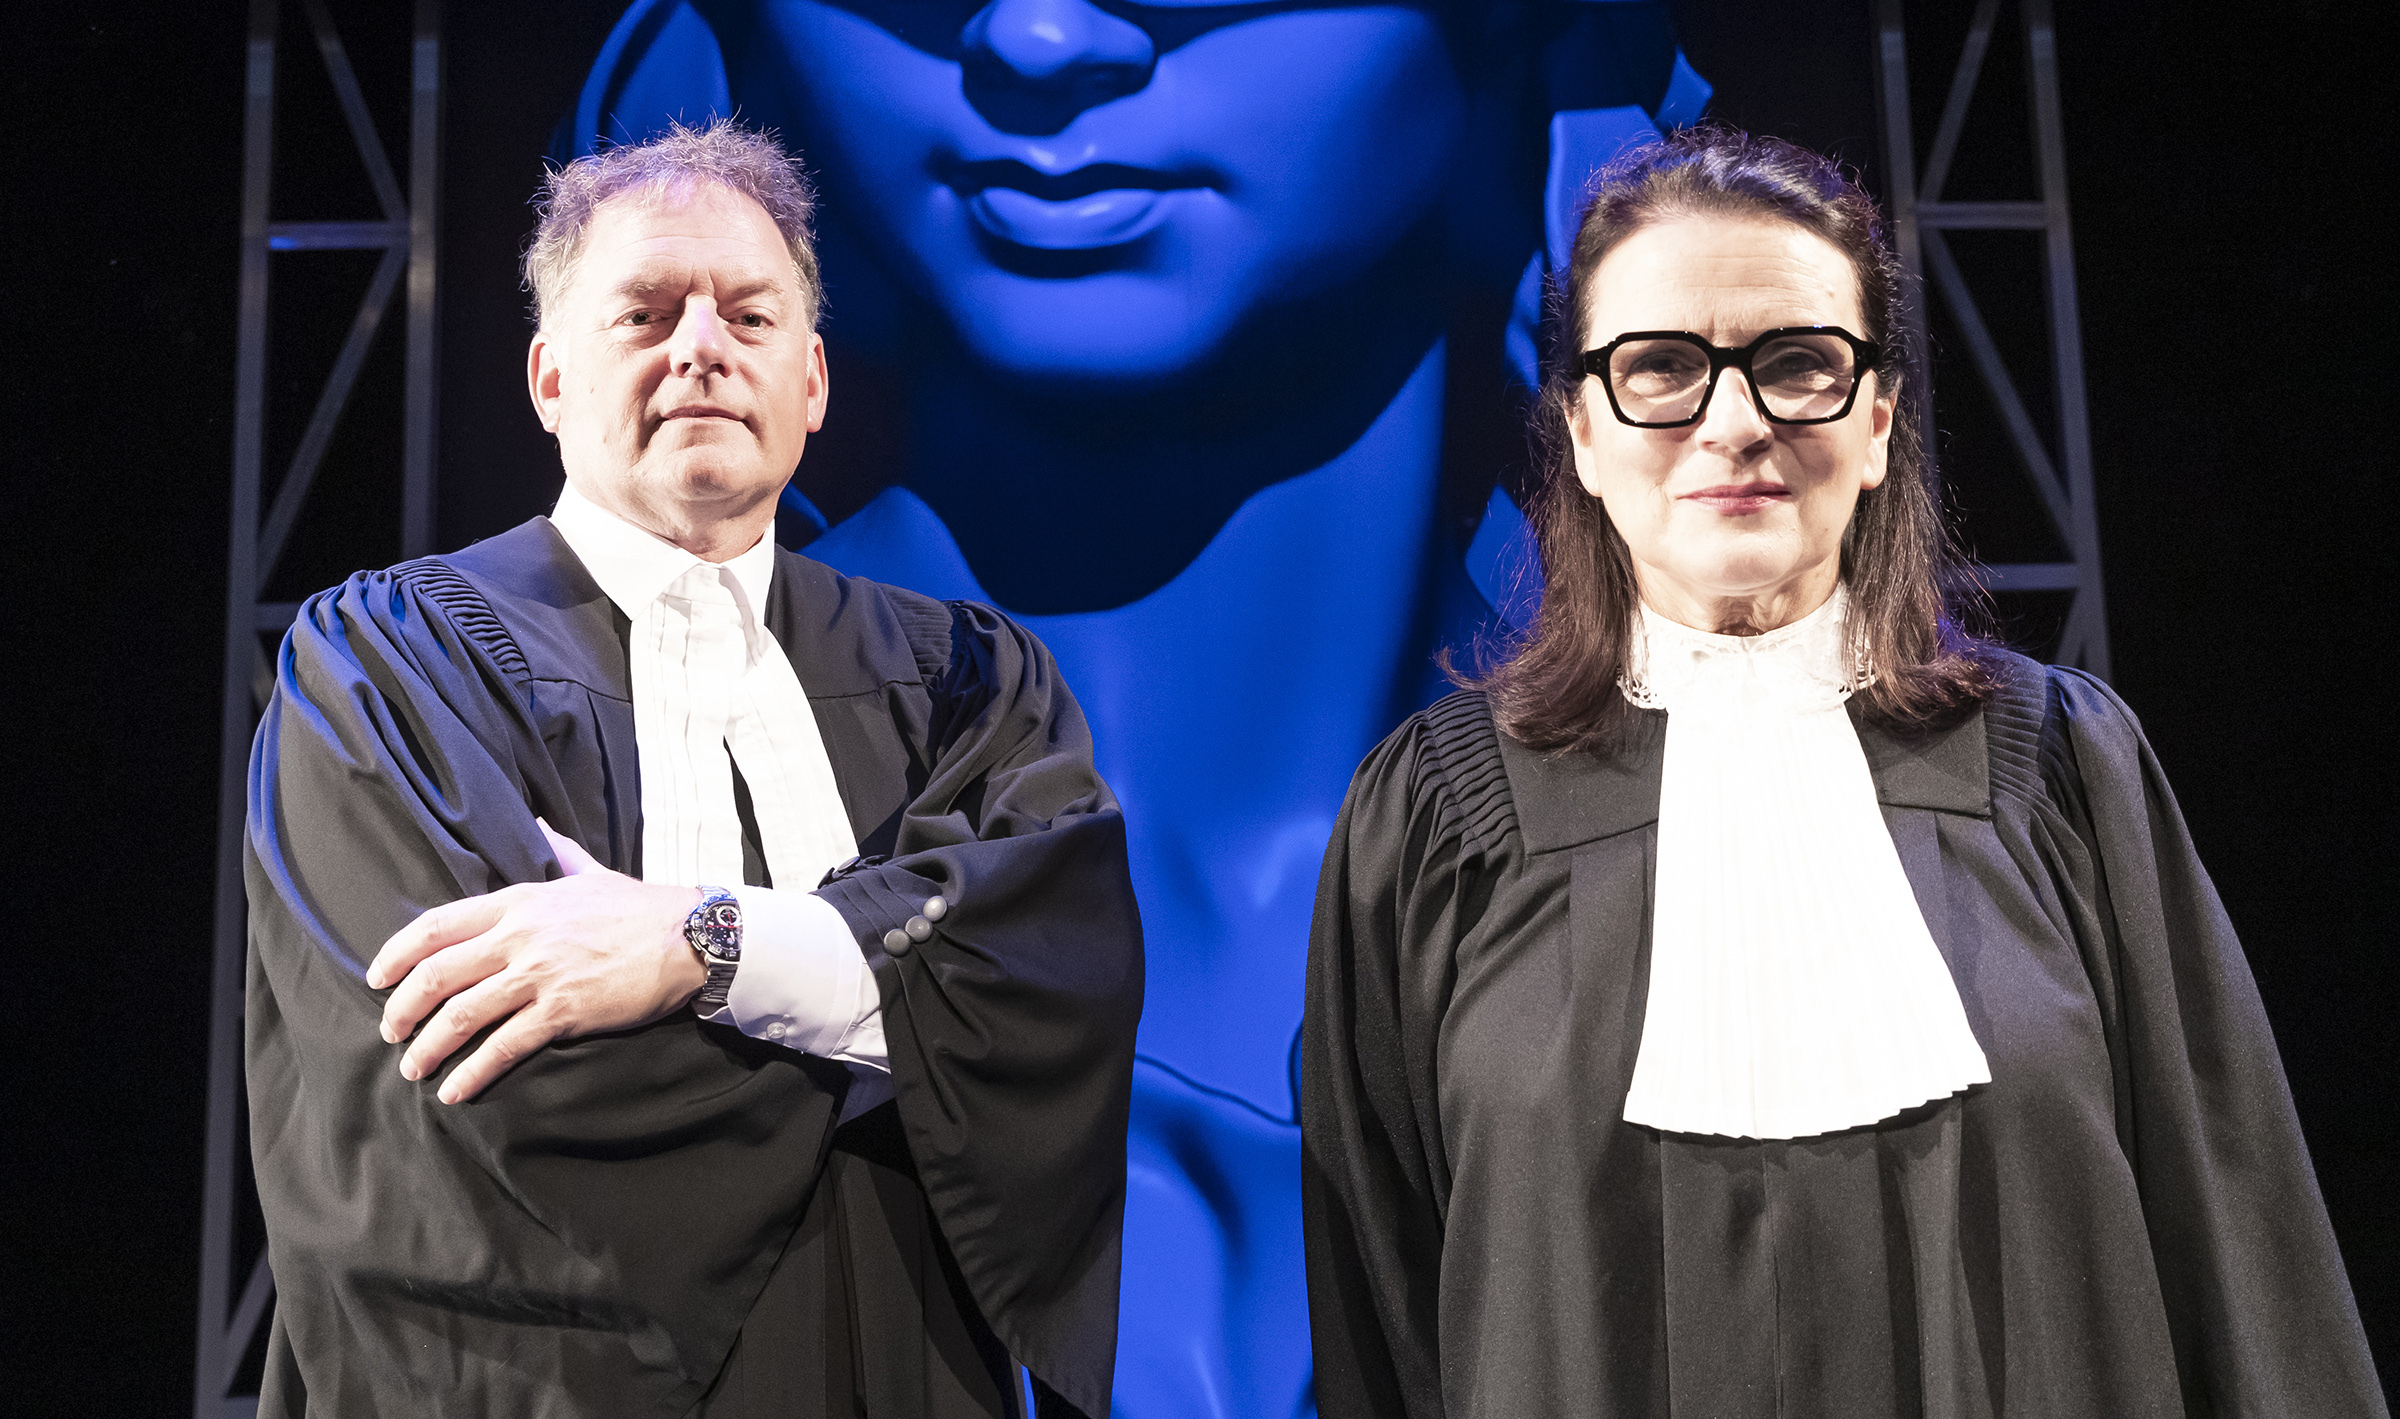 053 verdict 20 09 2022 Verdict avec Paul Doucet et Marie Therese Fortin